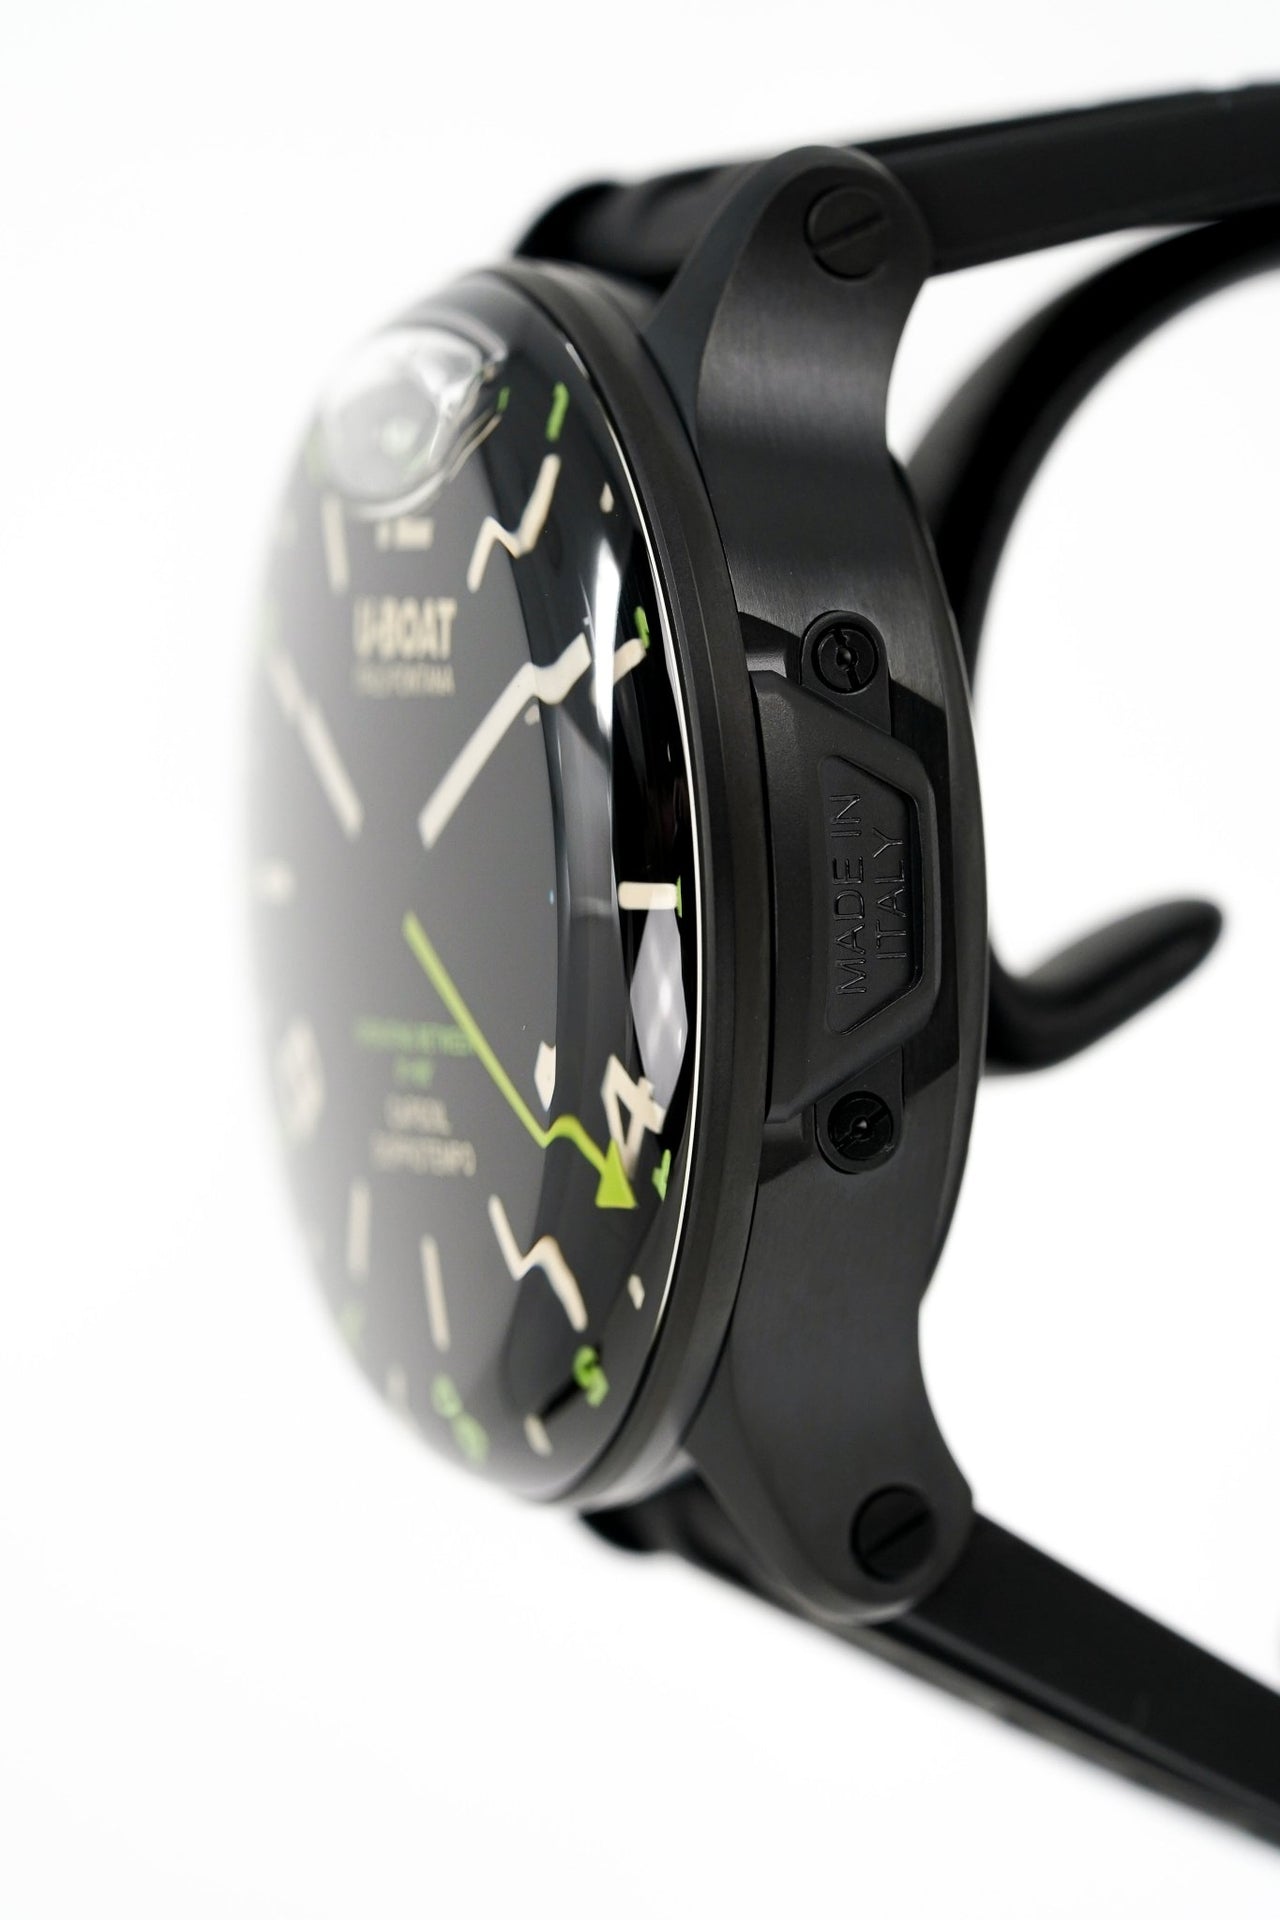 U-Boat Watch Capsoil Doppiotempo 45 DLC Green Rehaut 8840/A - Watches & Crystals